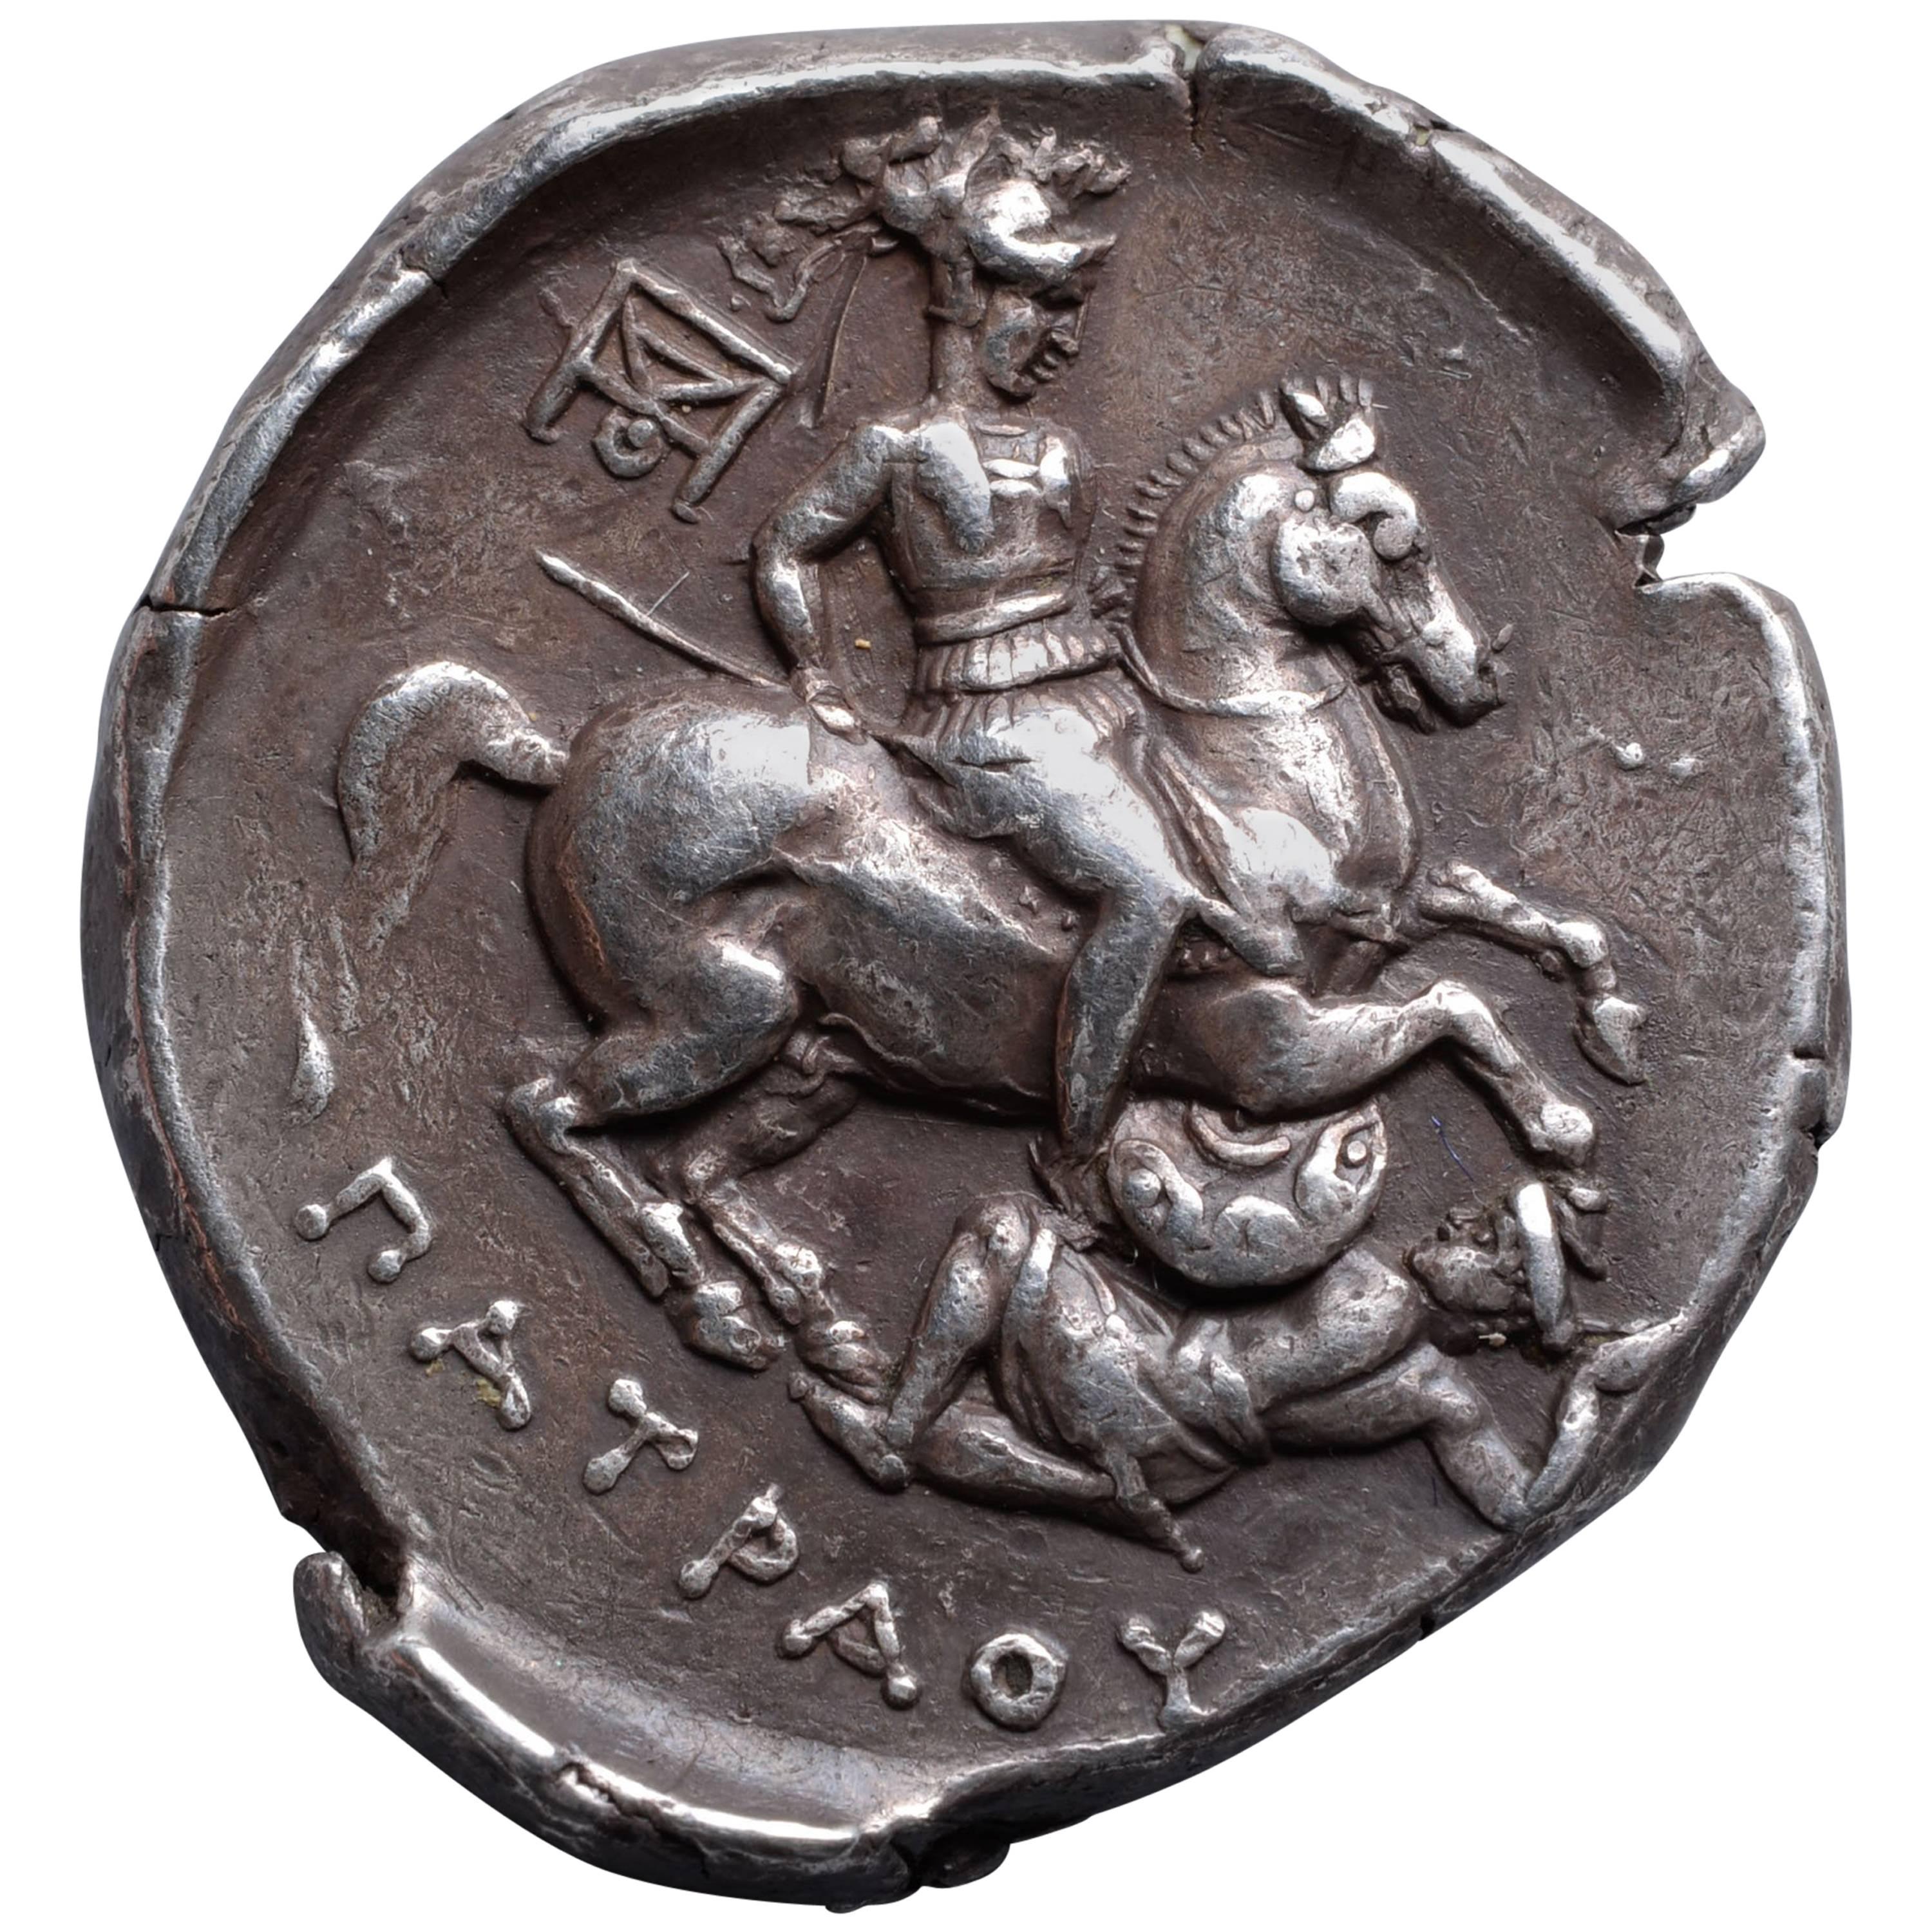 Ancient Greek Silver Tetradrachm Coin with a Warrior on Horseback, 335 BC